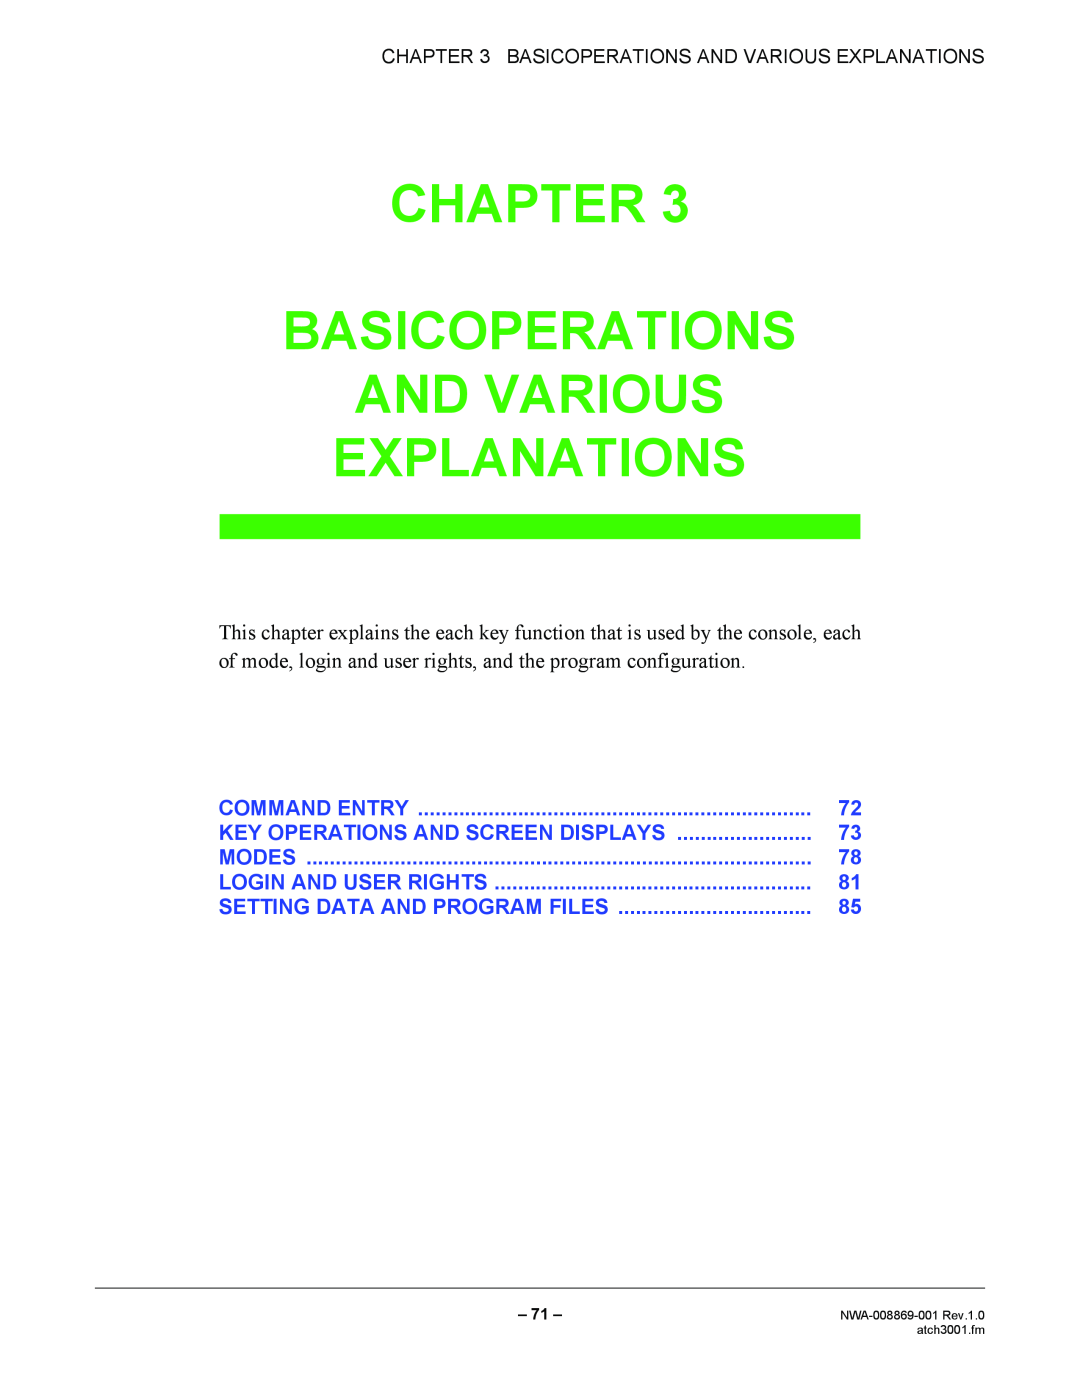 NEC manual Chapter Basicoperations And Various Explanations, NWA-008869-001 Rev.1.0 